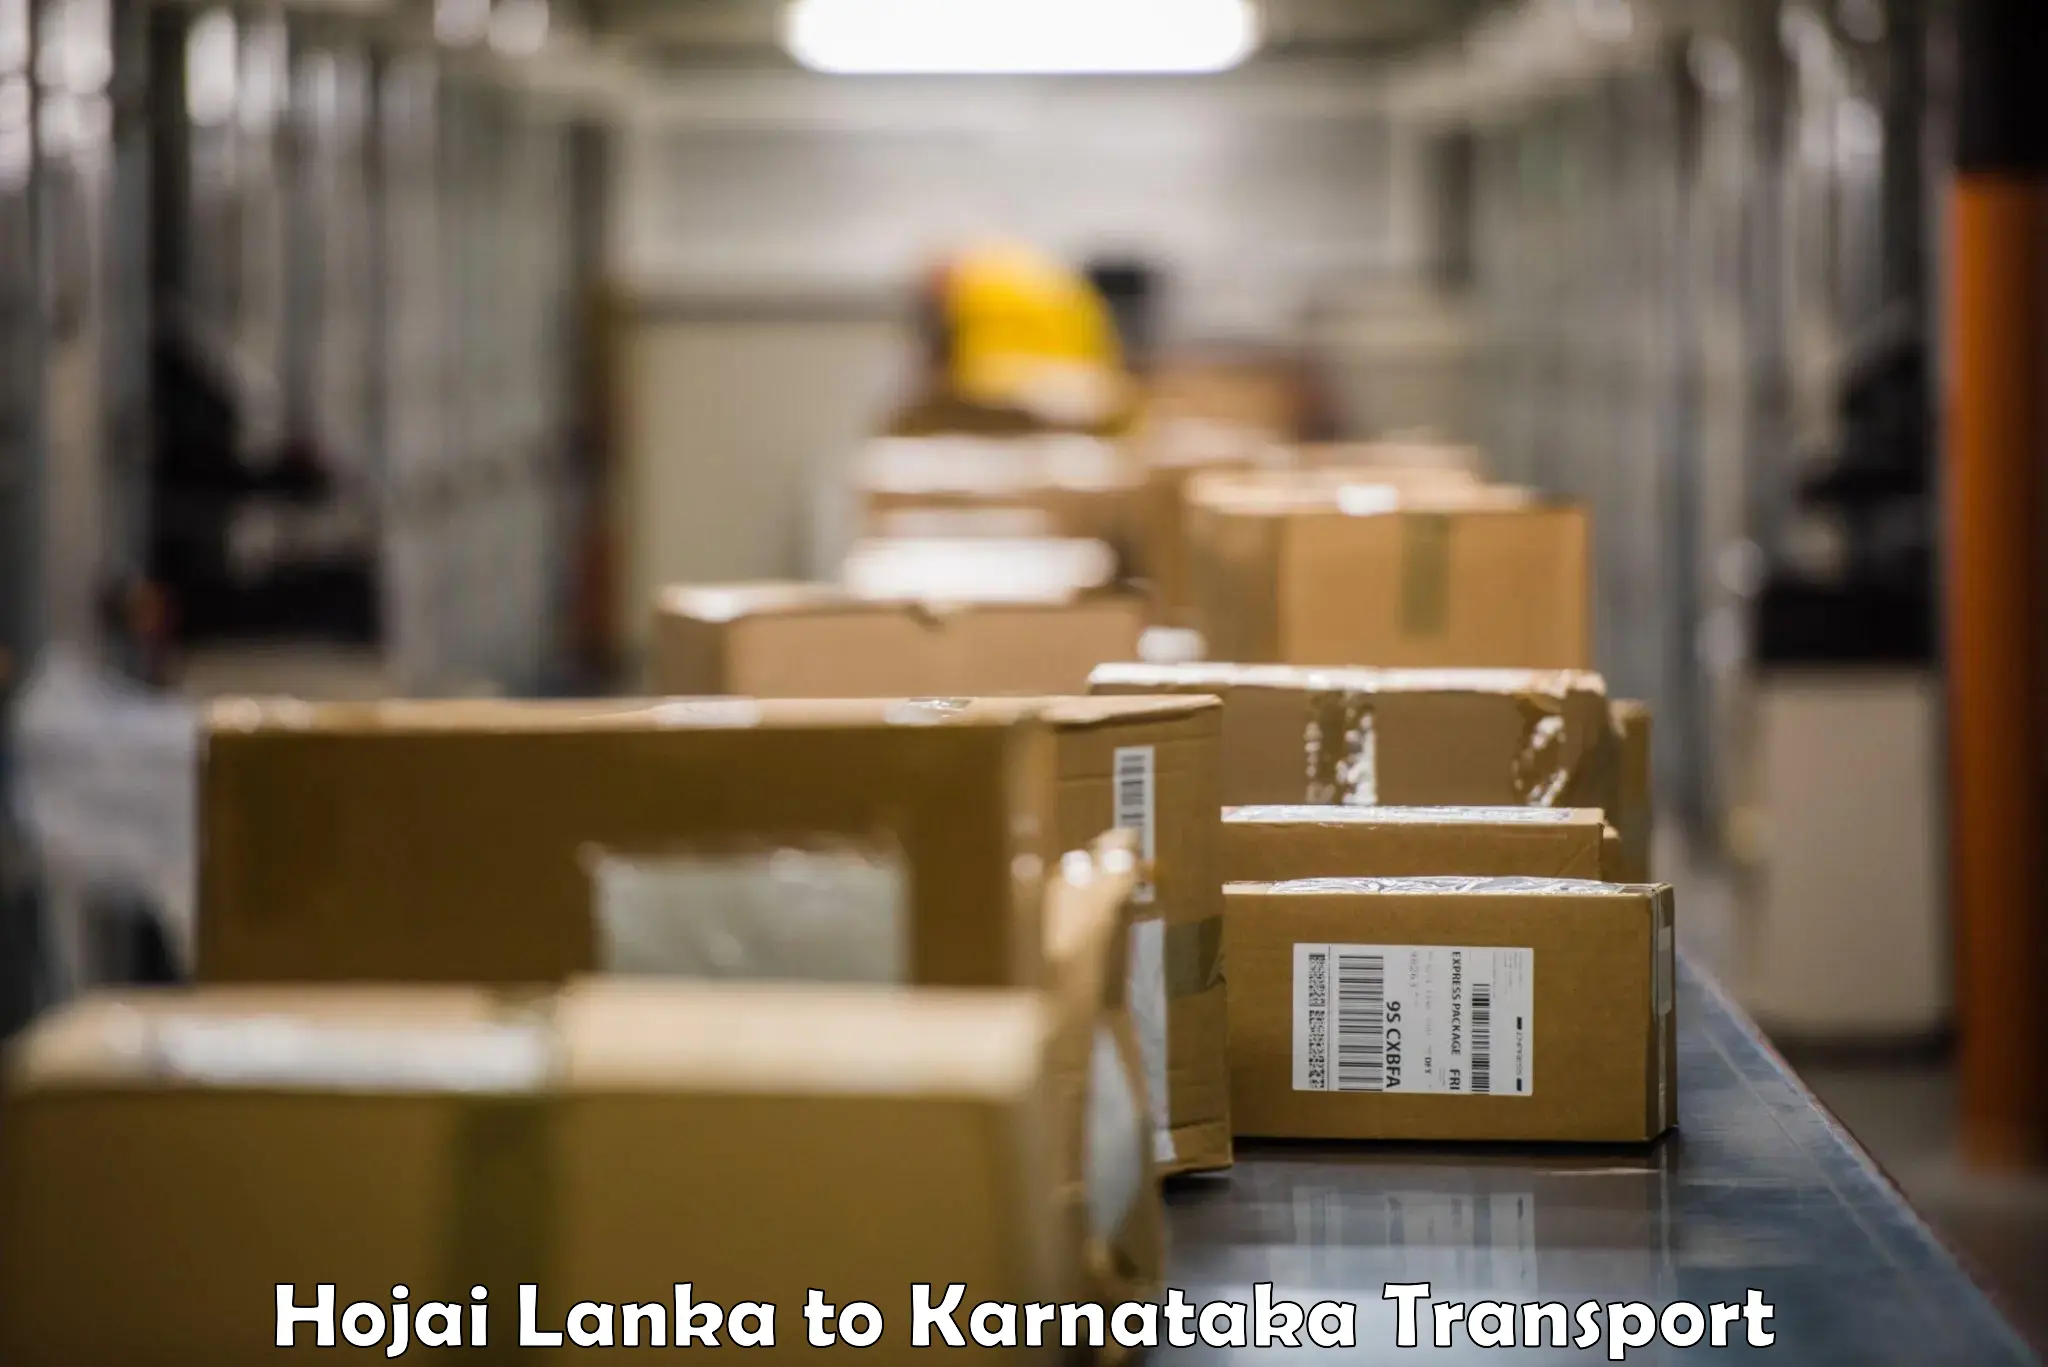 Goods delivery service Hojai Lanka to Mudhol